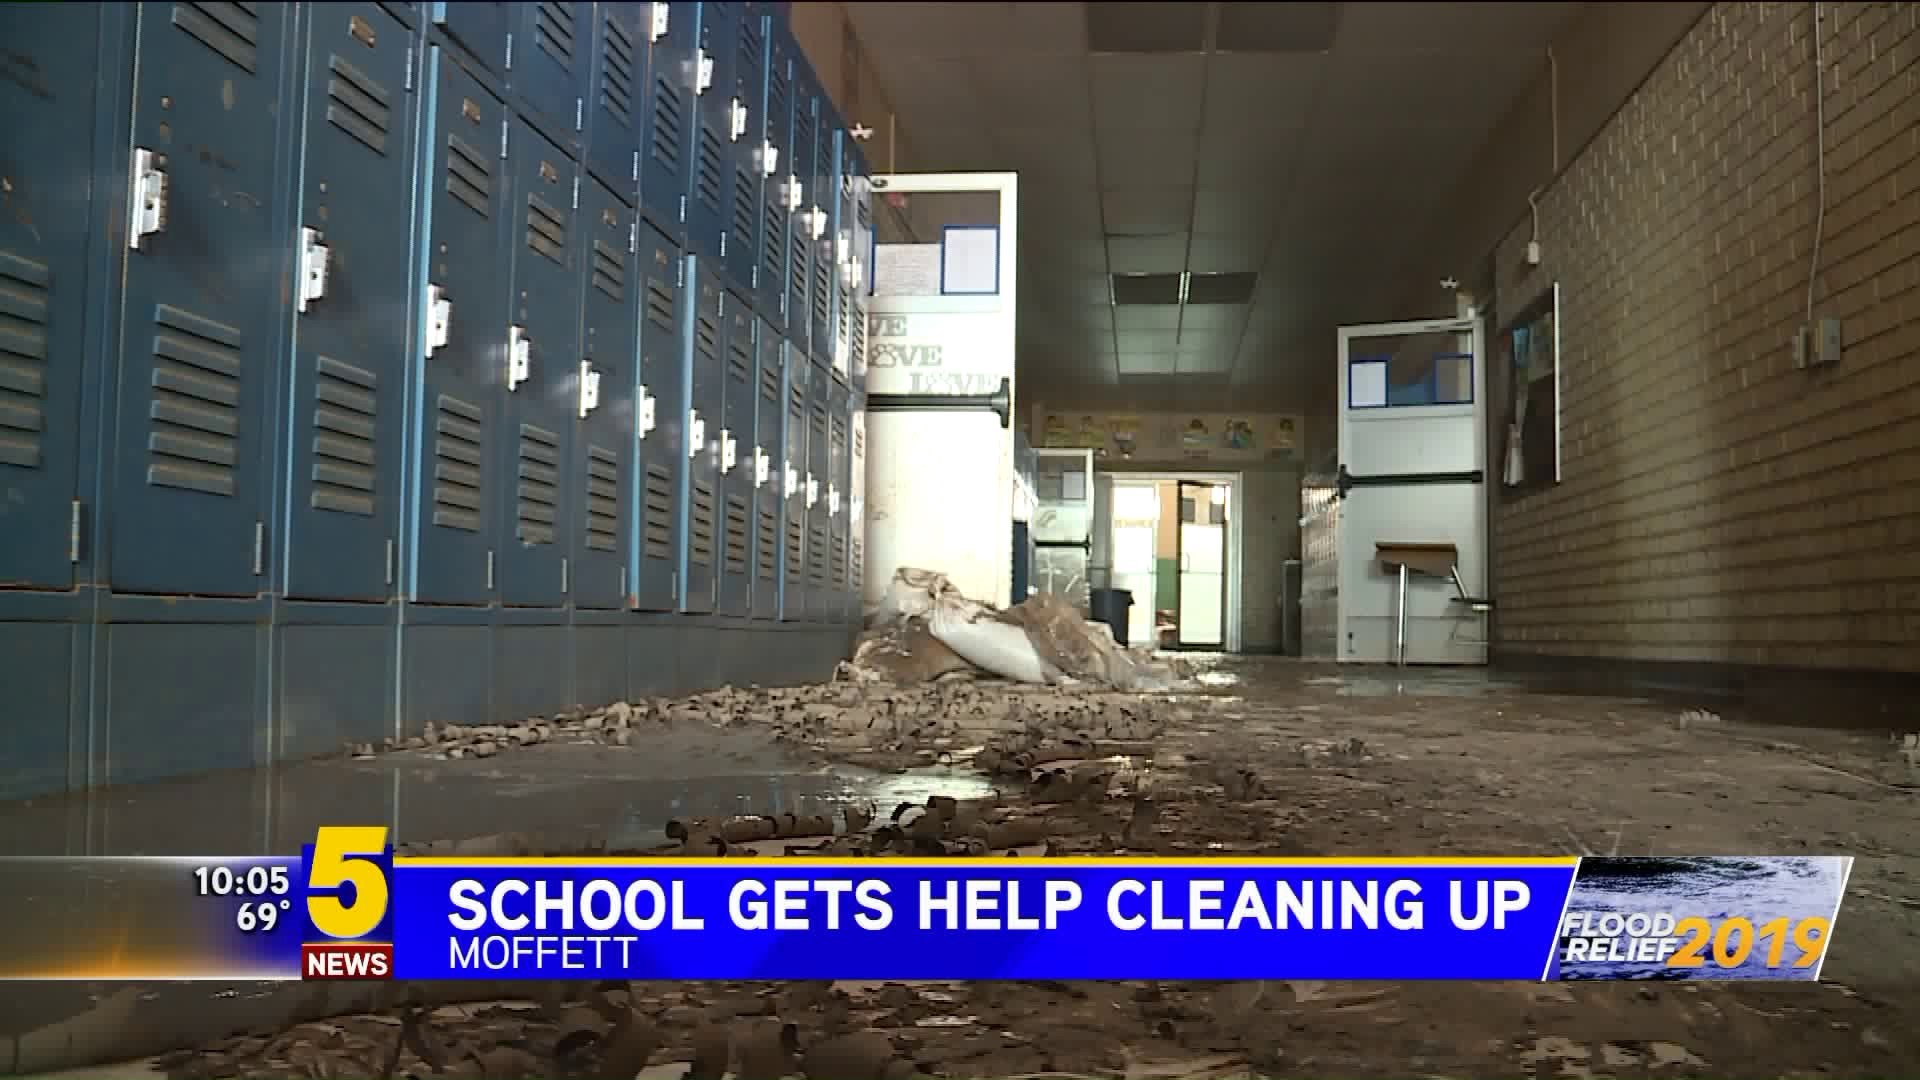 Moffett School Gets Help Cleaning Up